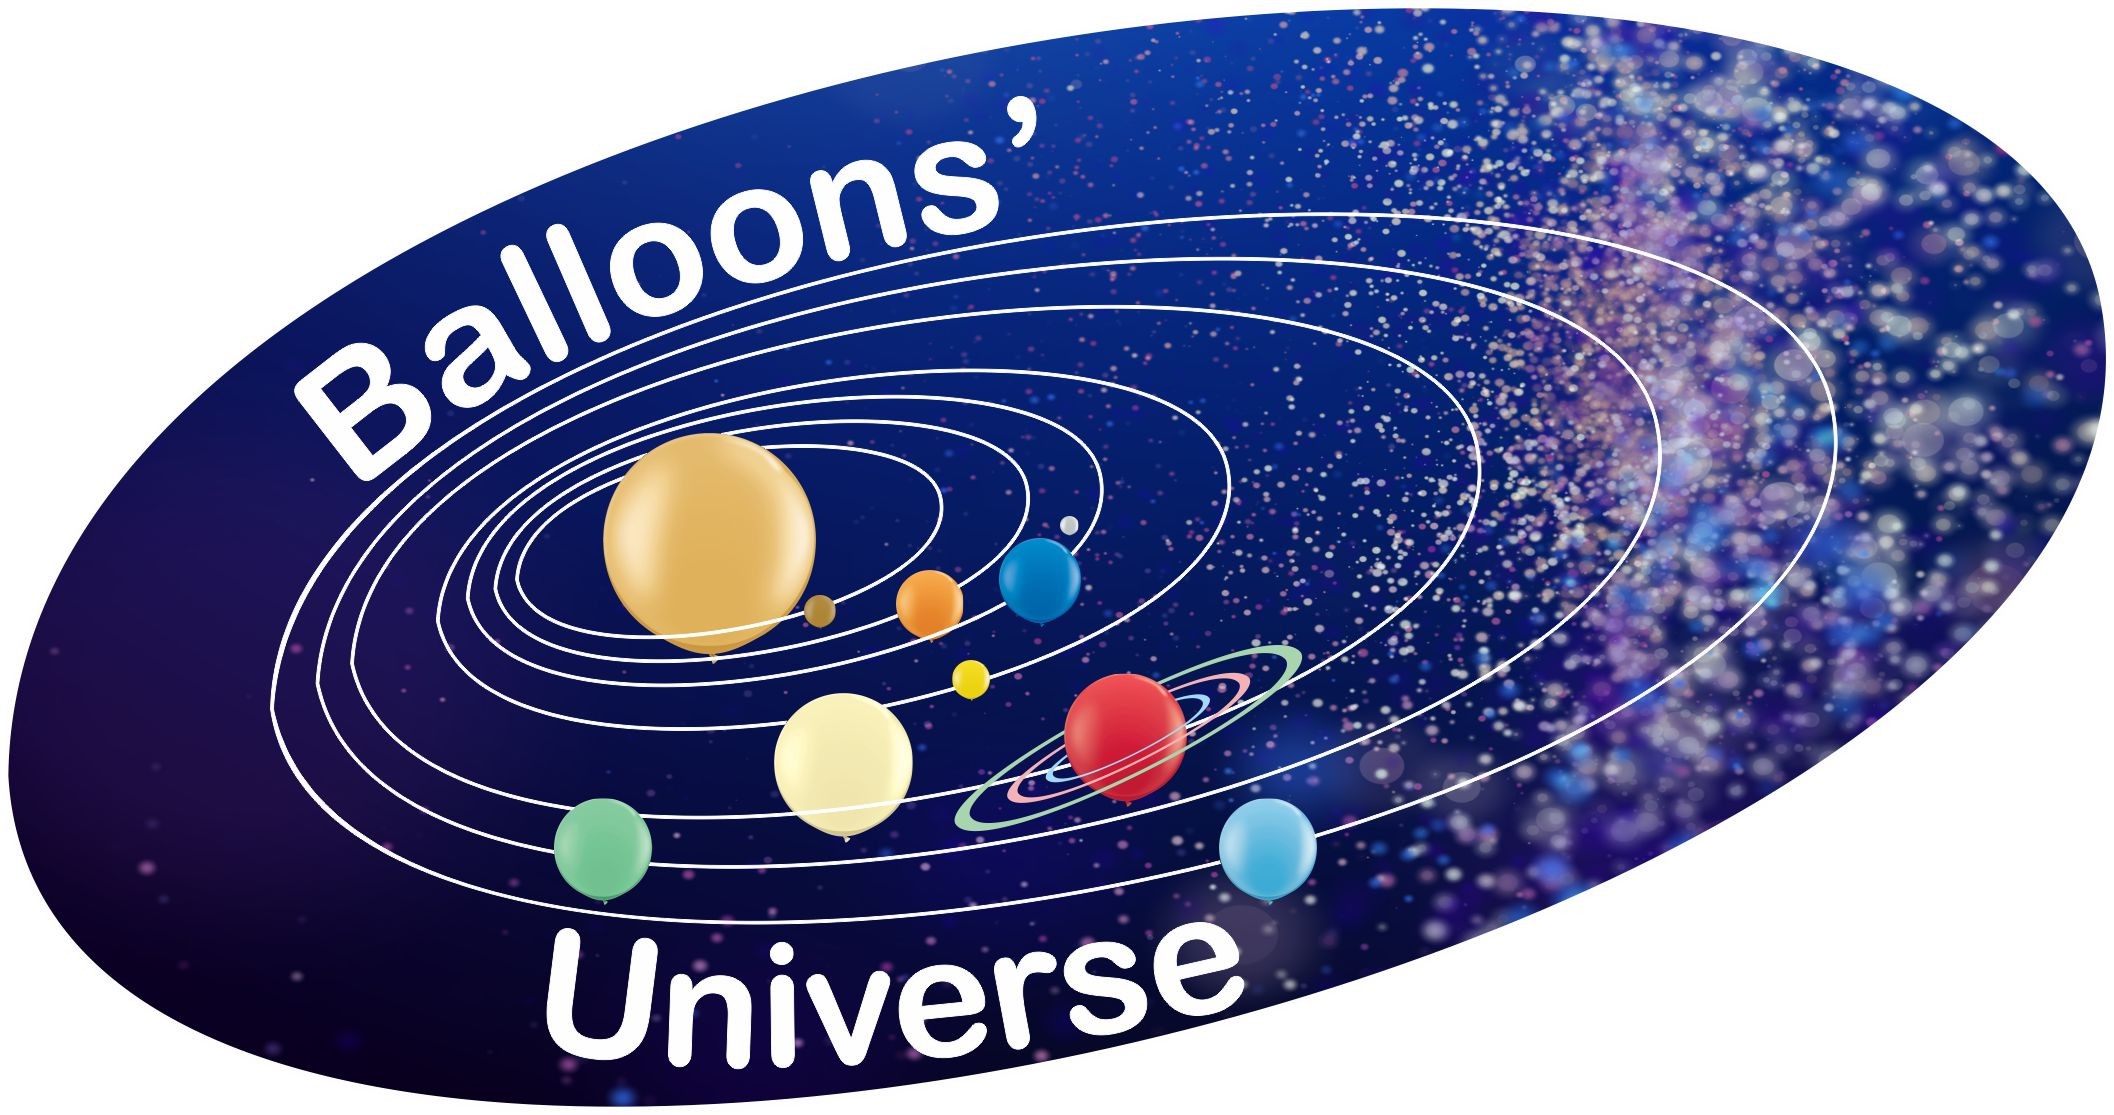 Balloons' Universe